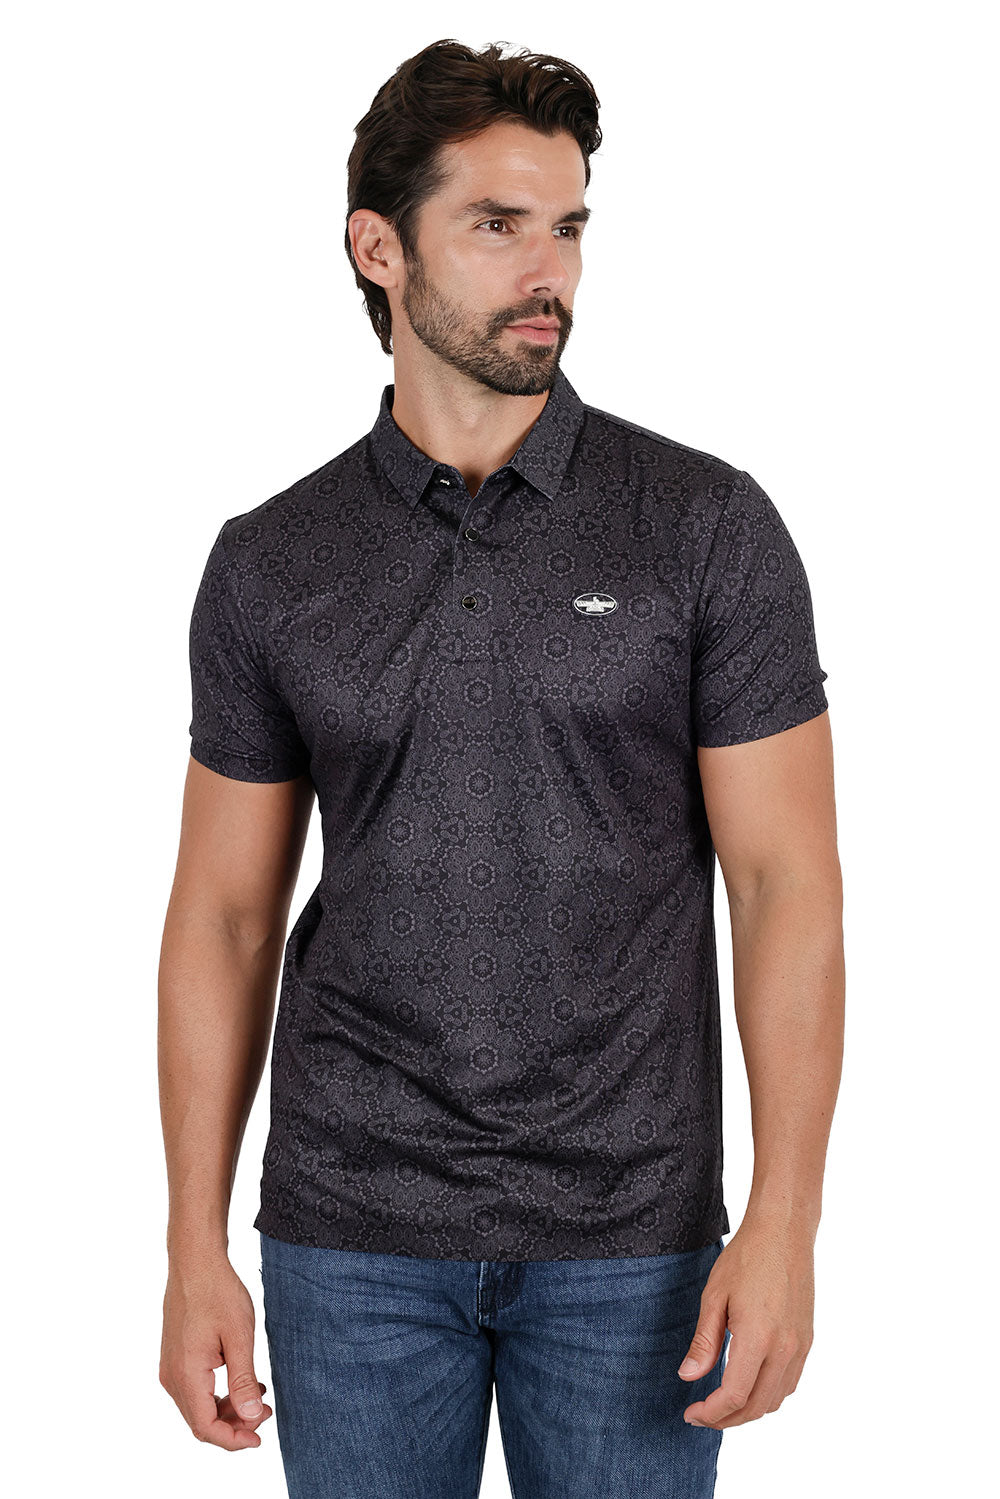 Barabas Men's Geometric Floral Shiny Short Sleeve Polo Shirts 3P08 Black Charcoal